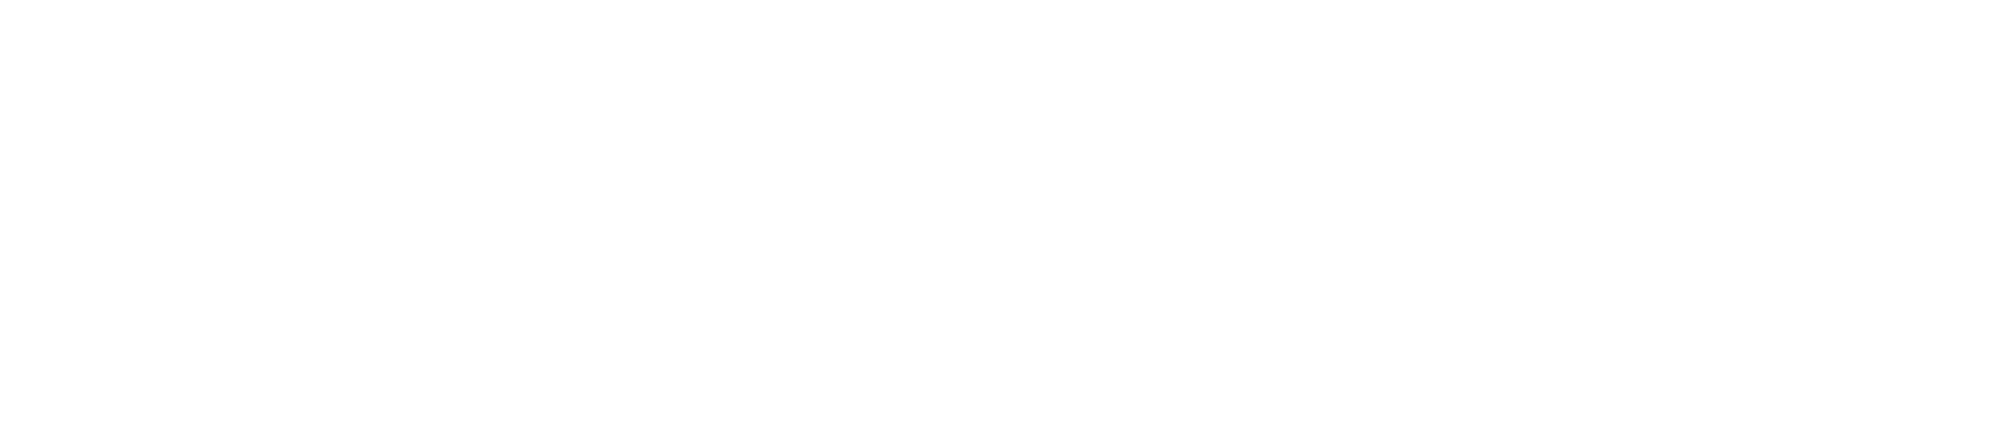 Boston Valuation Services